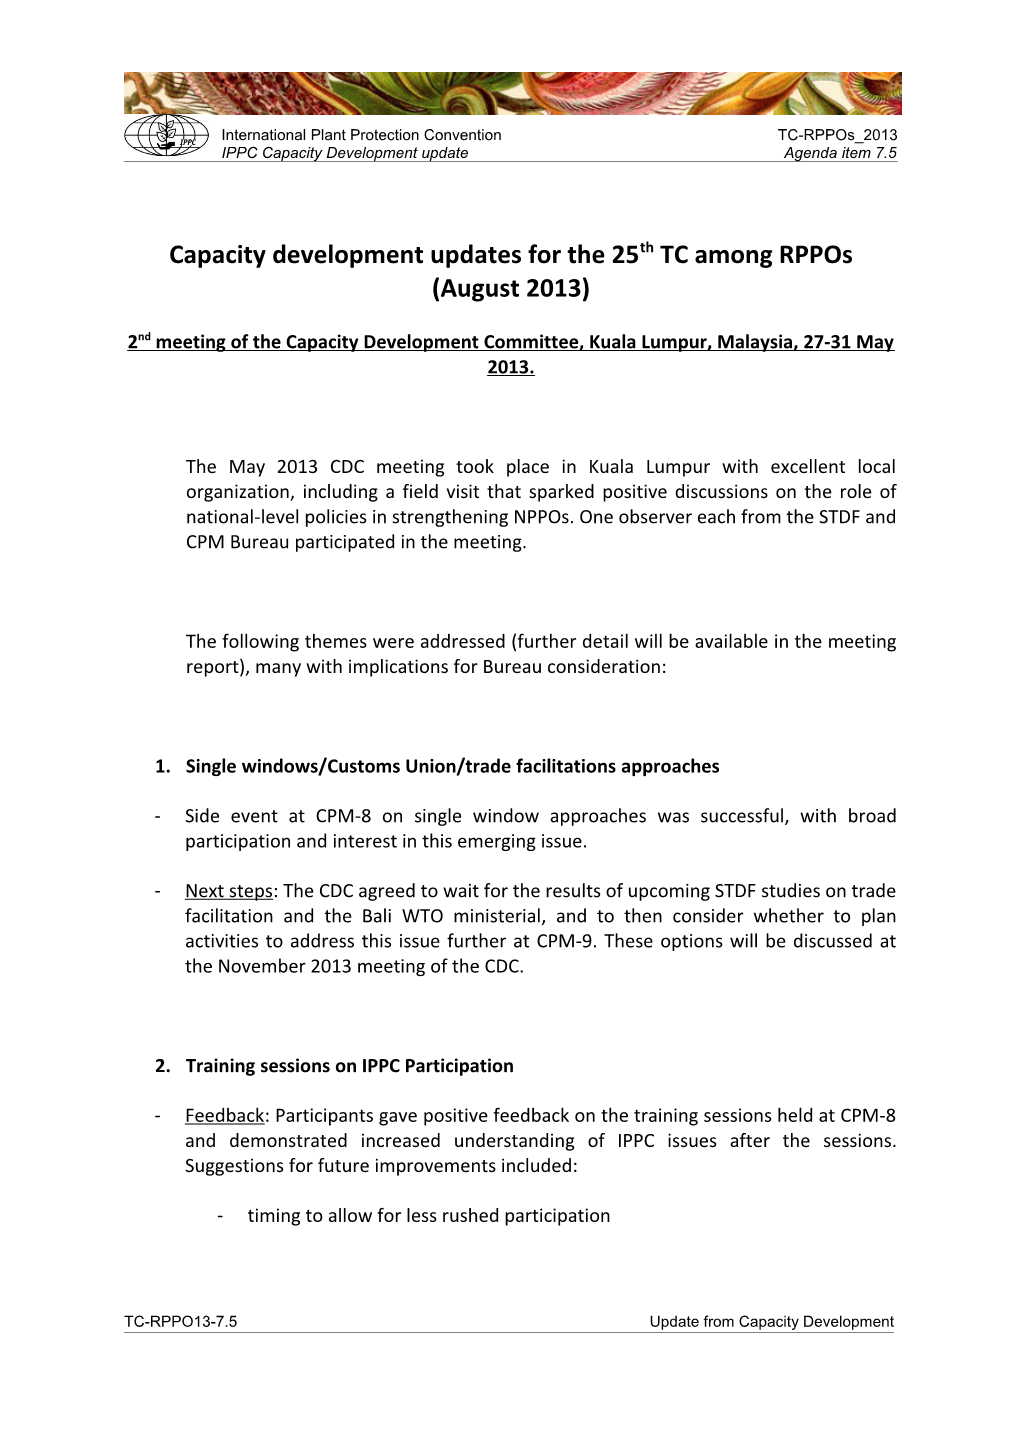 IPPC Capacity Development Updateagenda Item 7.5